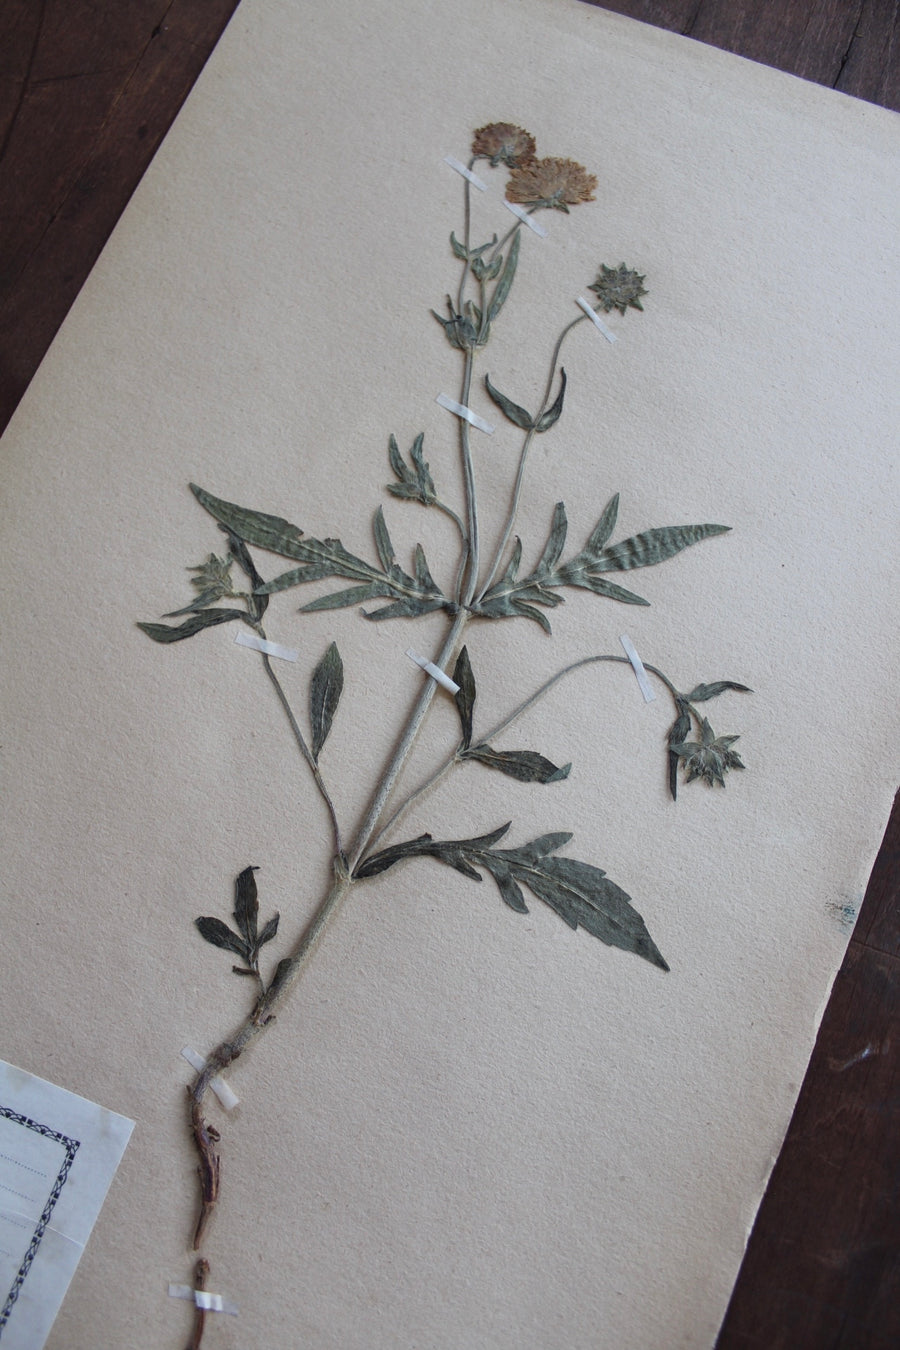 1930s Swedish Herbarium Specimen - Field Scabiosa